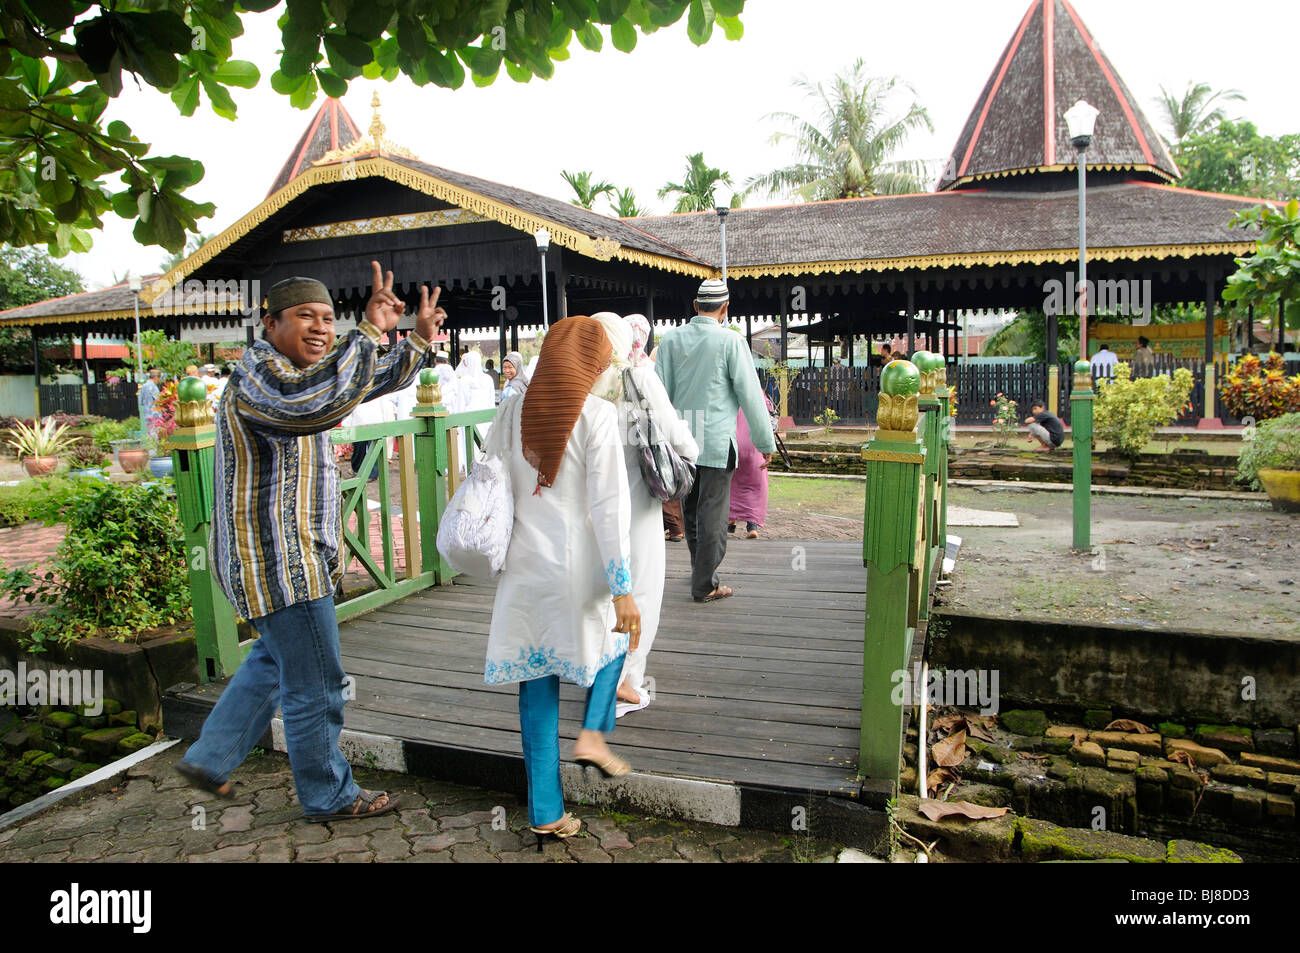 Sultan Surian Kuin Mosque, Banjarmasin, Kalimantan, Indonesia Stock Photo